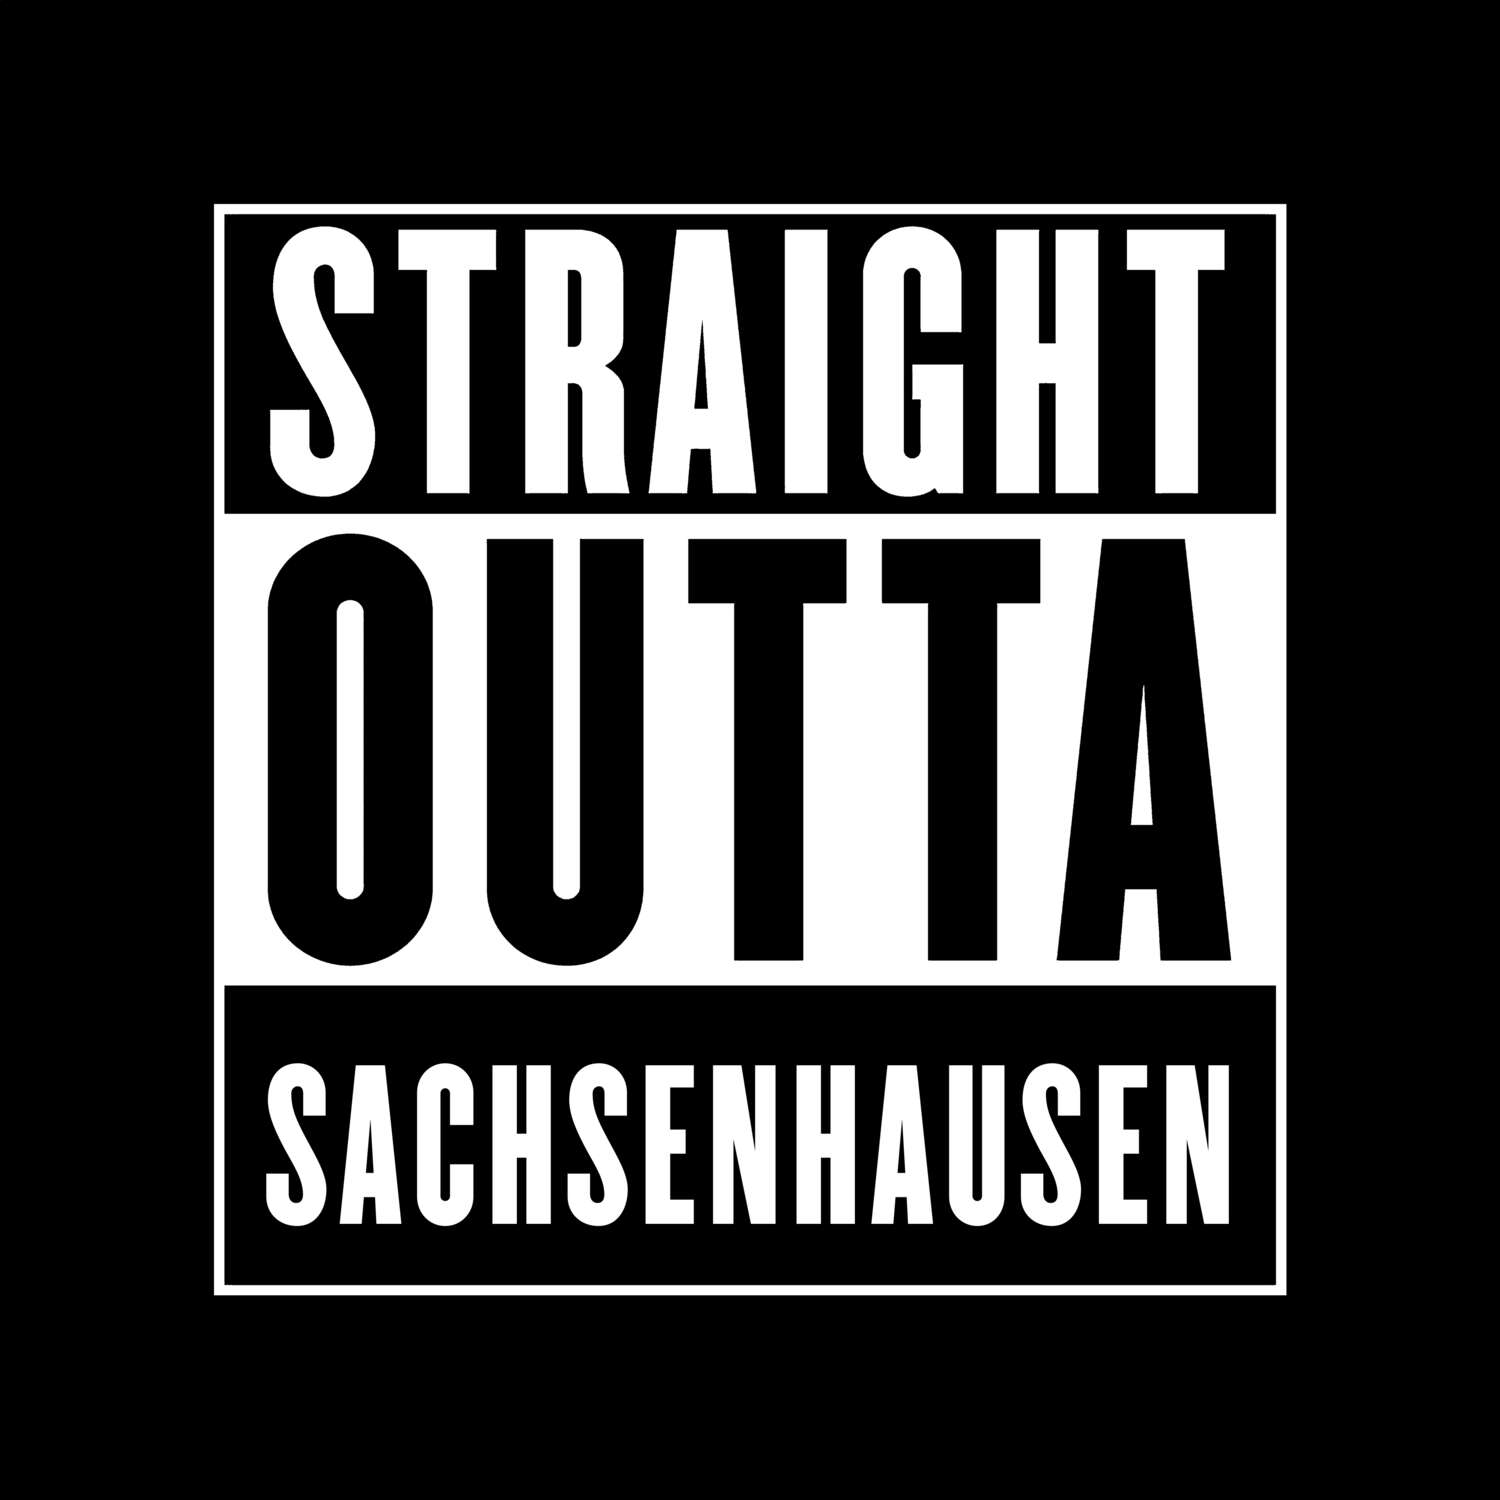 Sachsenhausen T-Shirt »Straight Outta«